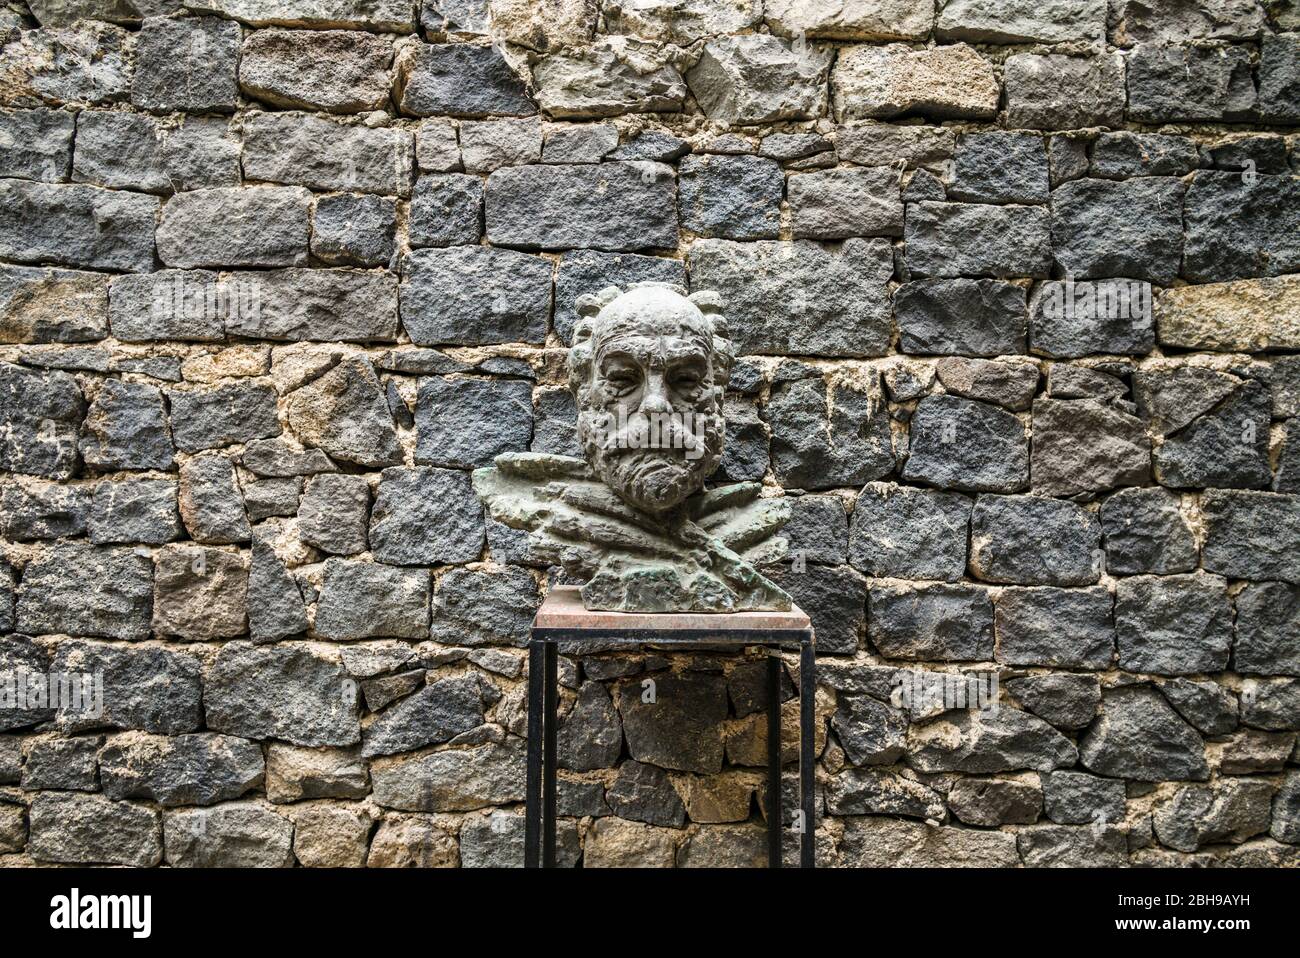 Armenia, Yerevan, Sergei Parajanov Museum, former home and museum dedicated to controversial Soviet-era filmaker, Sergei Parajanov, bust of the artist in courtyard, no releases Stock Photo